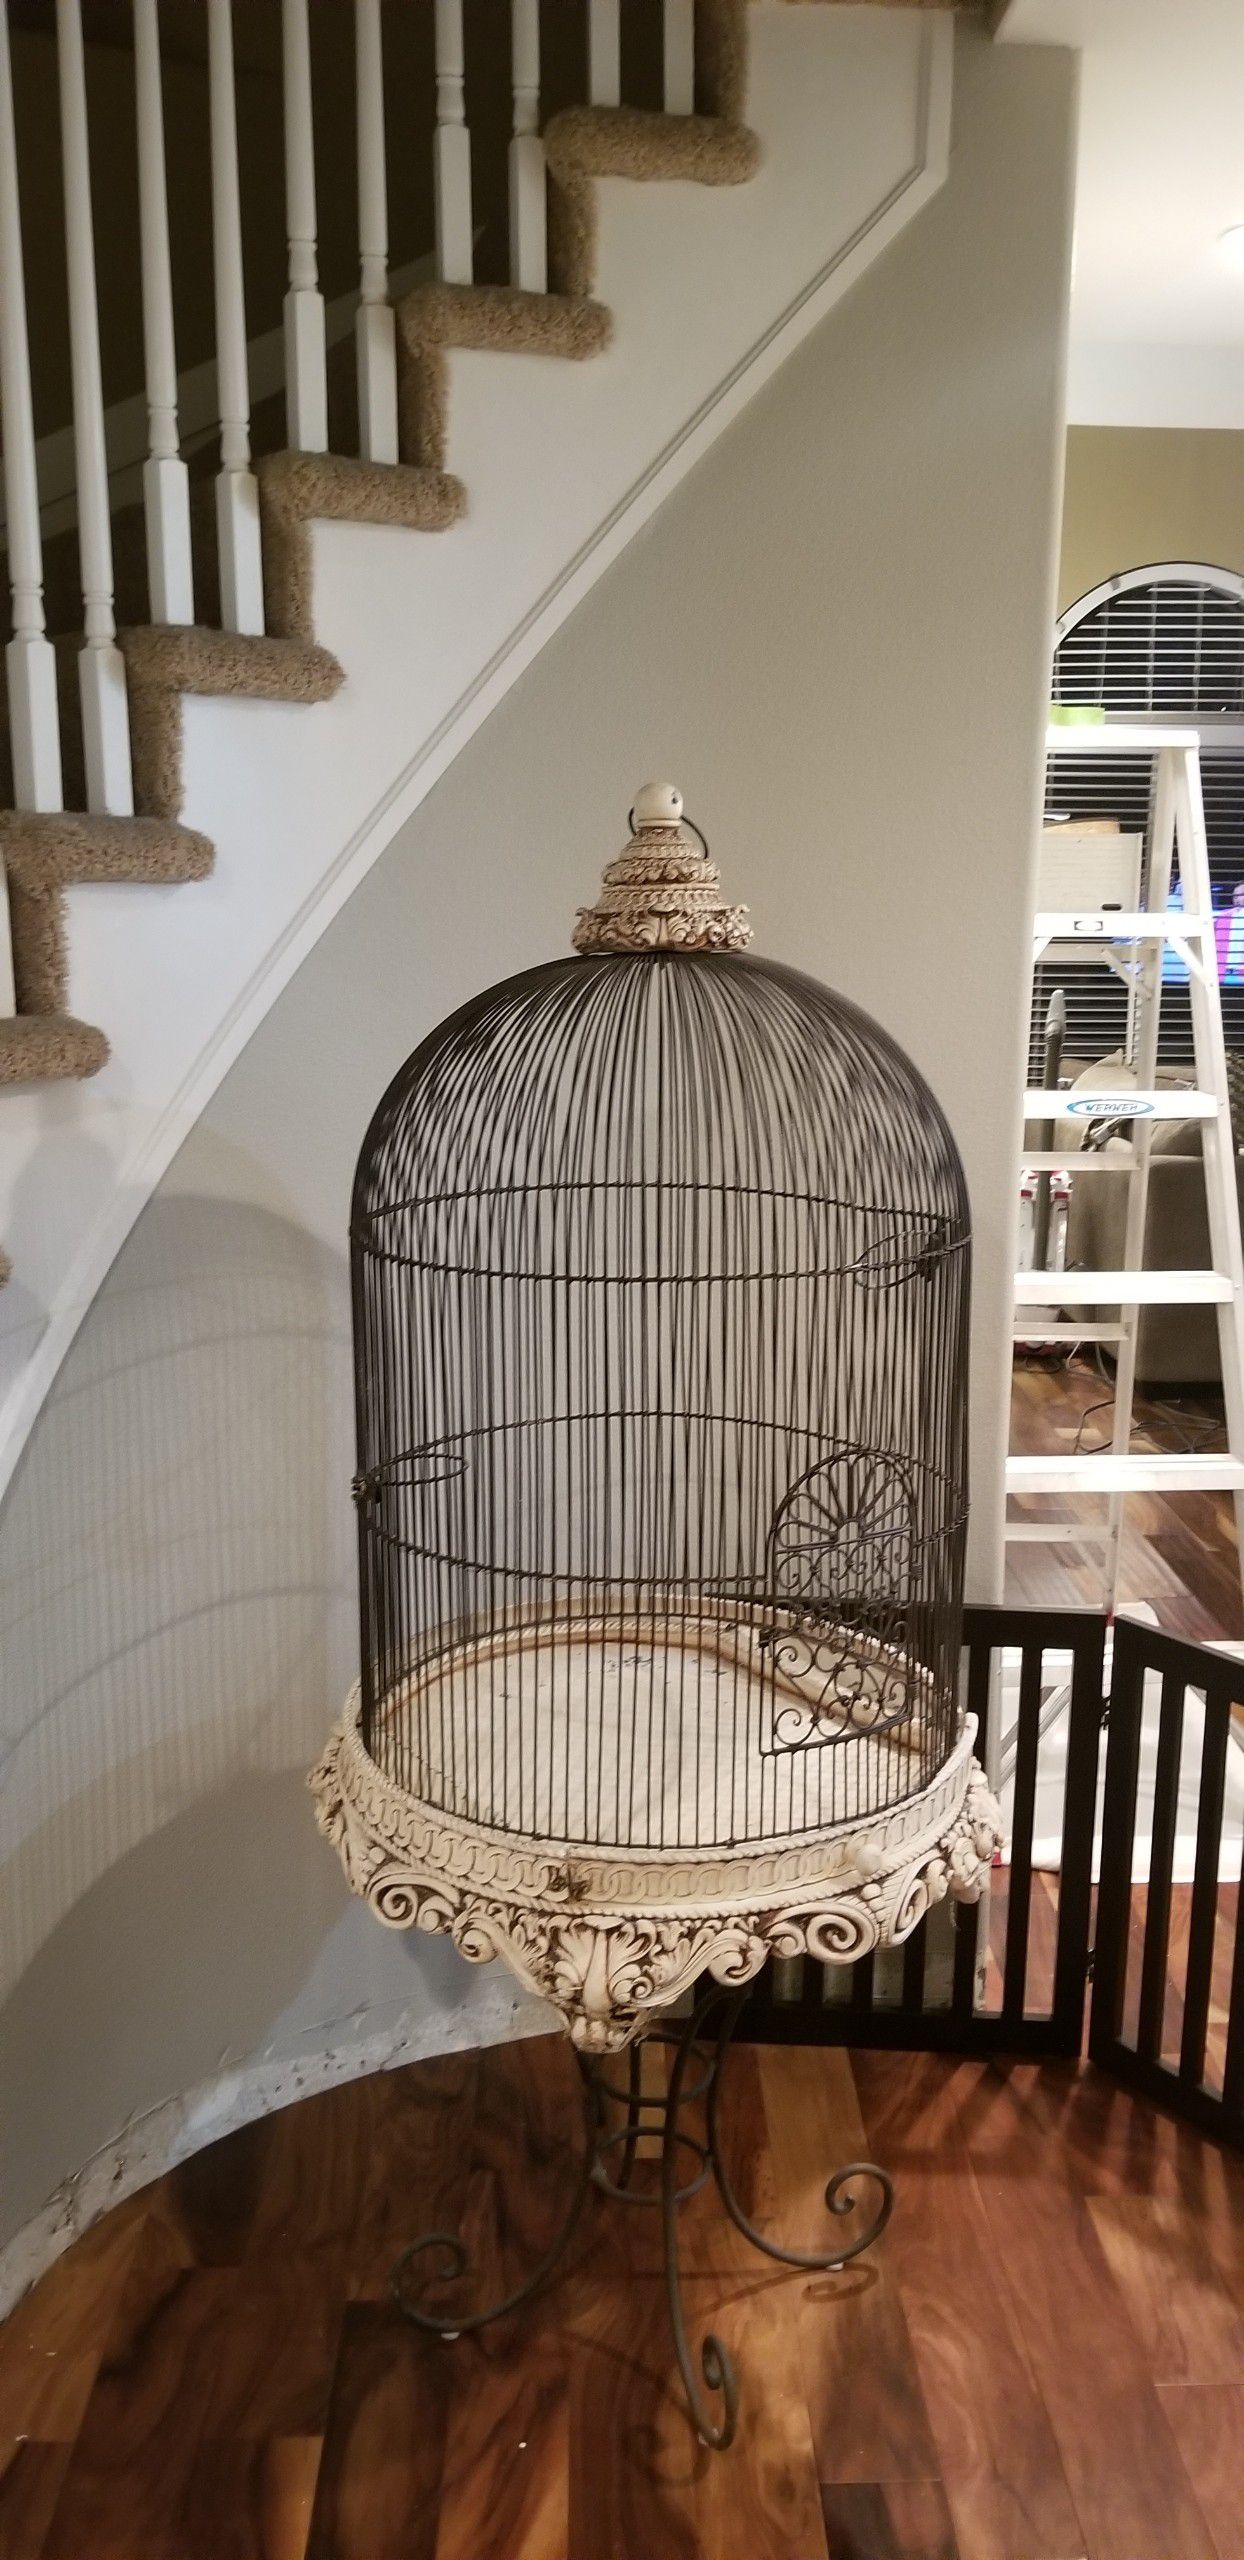 Beautiful bird cage